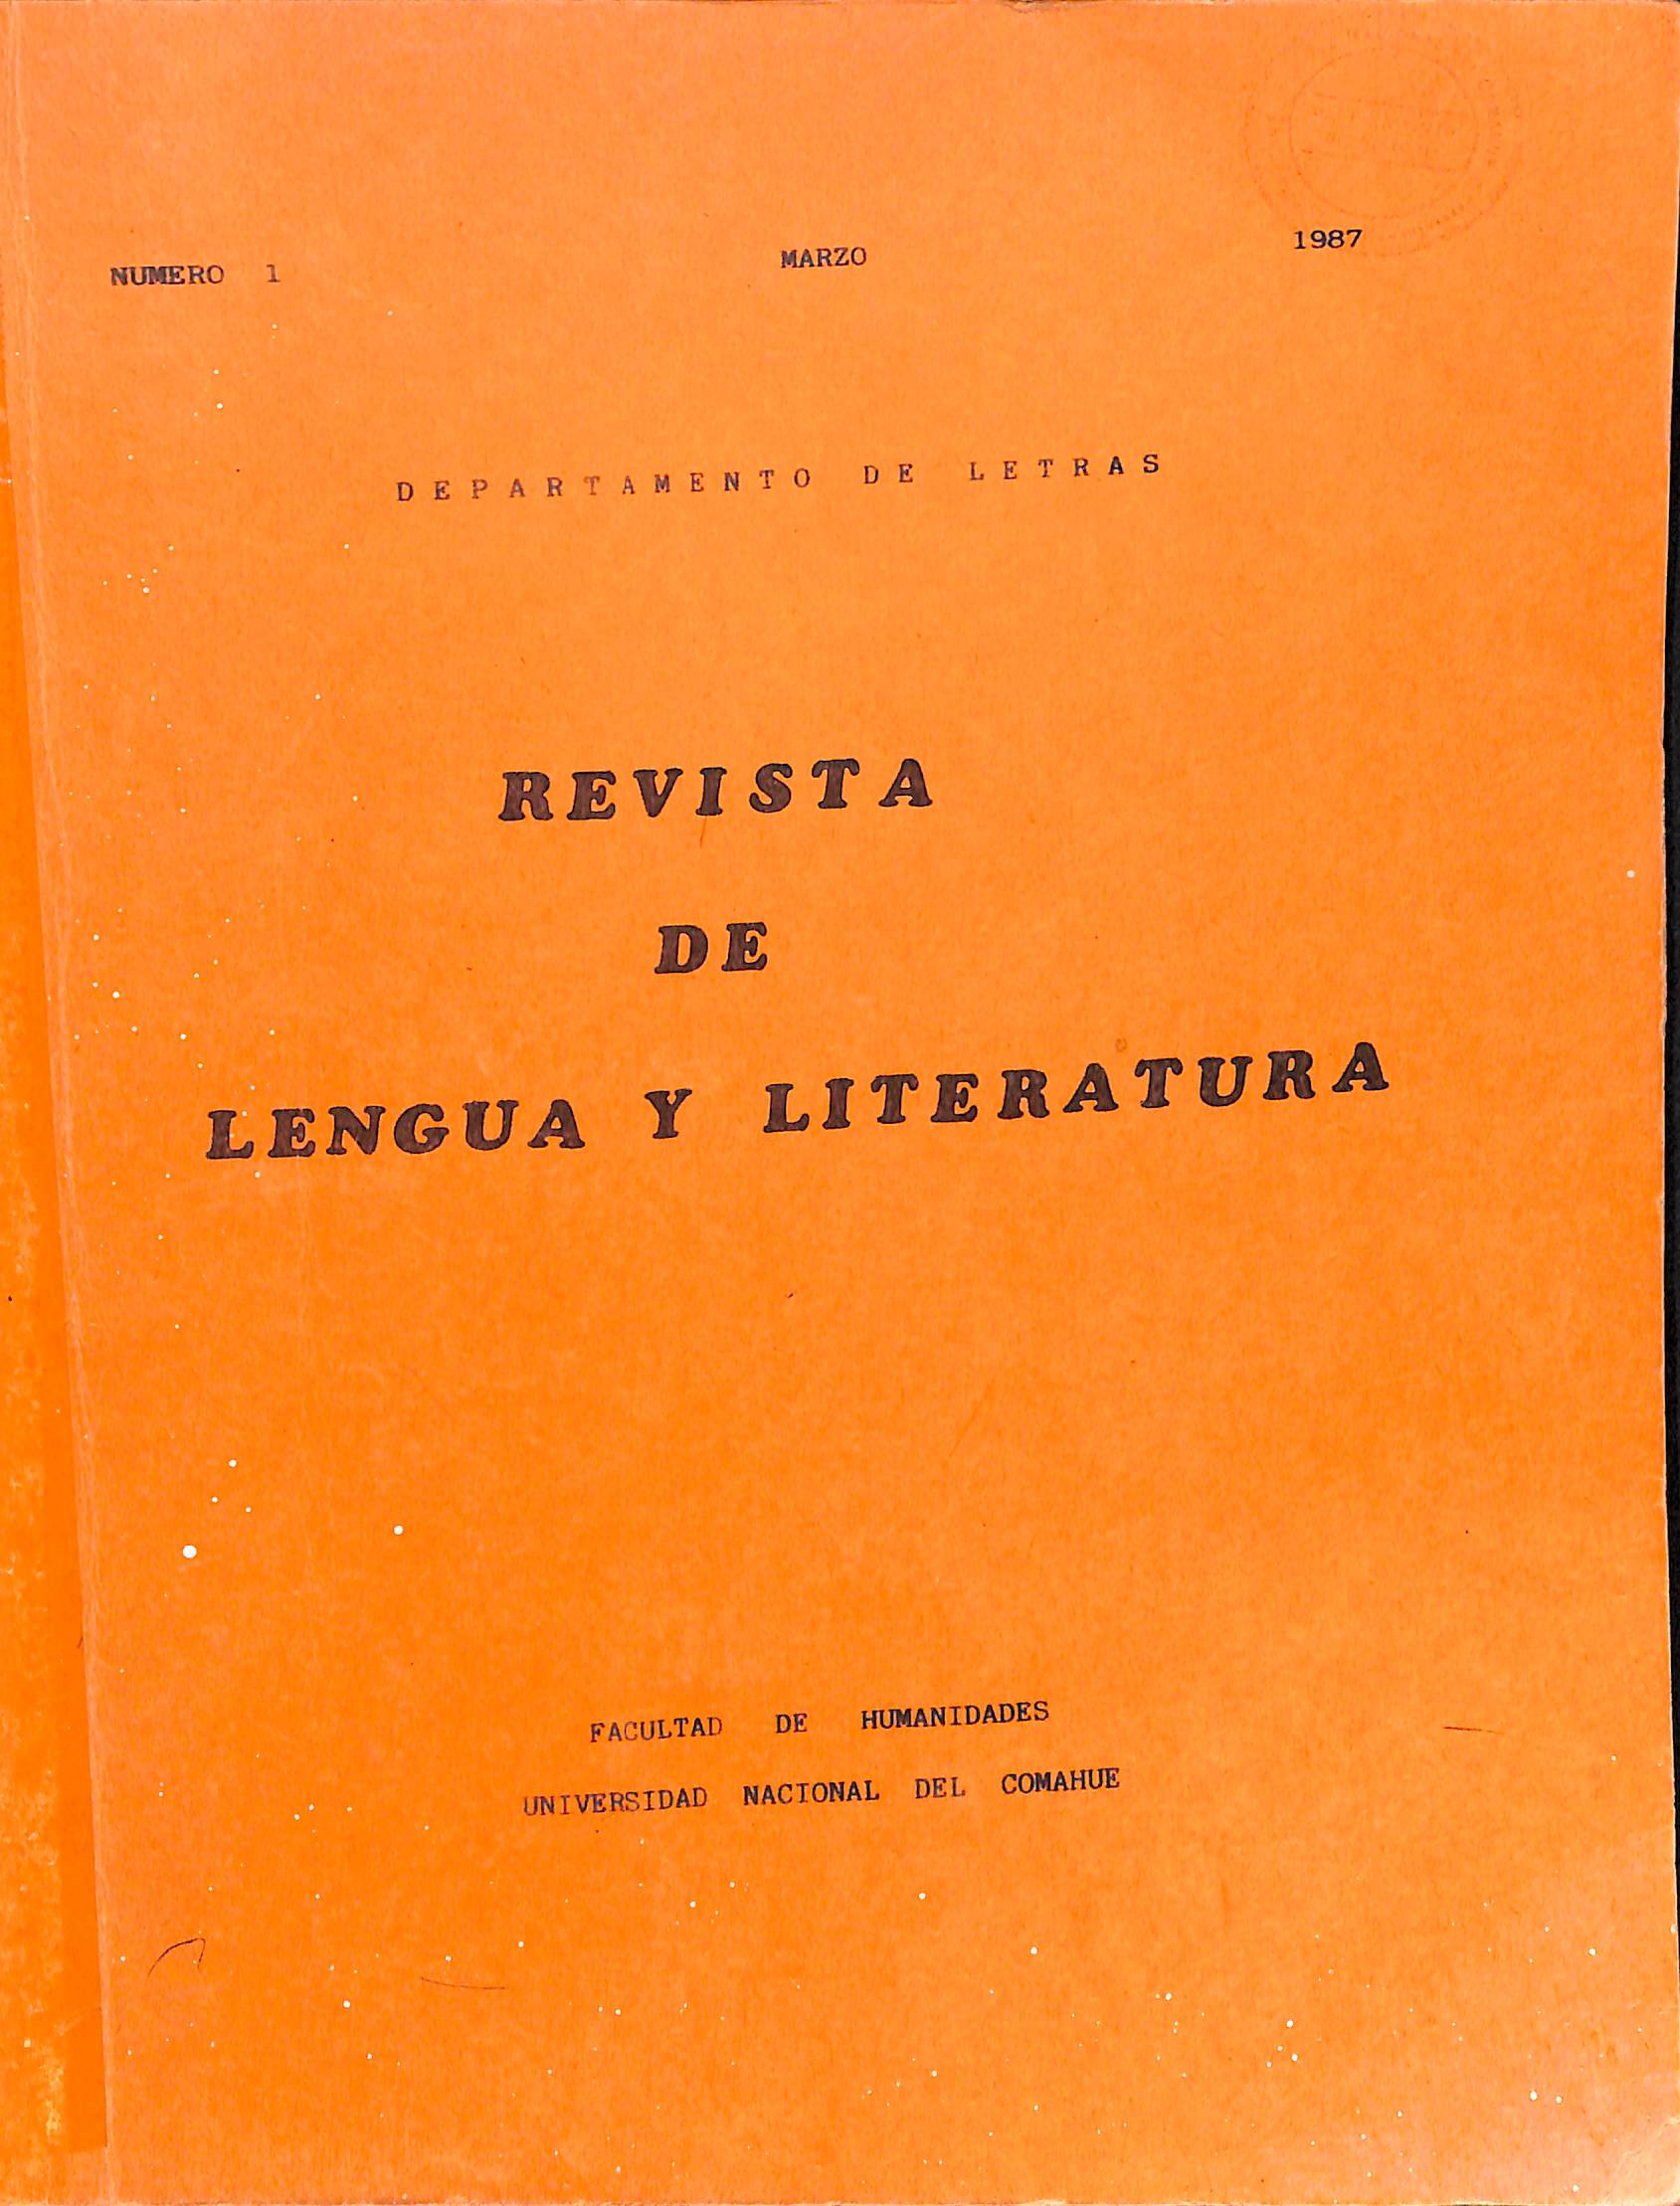 					Ver Vol. 1 Núm. 1 (1987): Revista de Lengua y Literatura
				